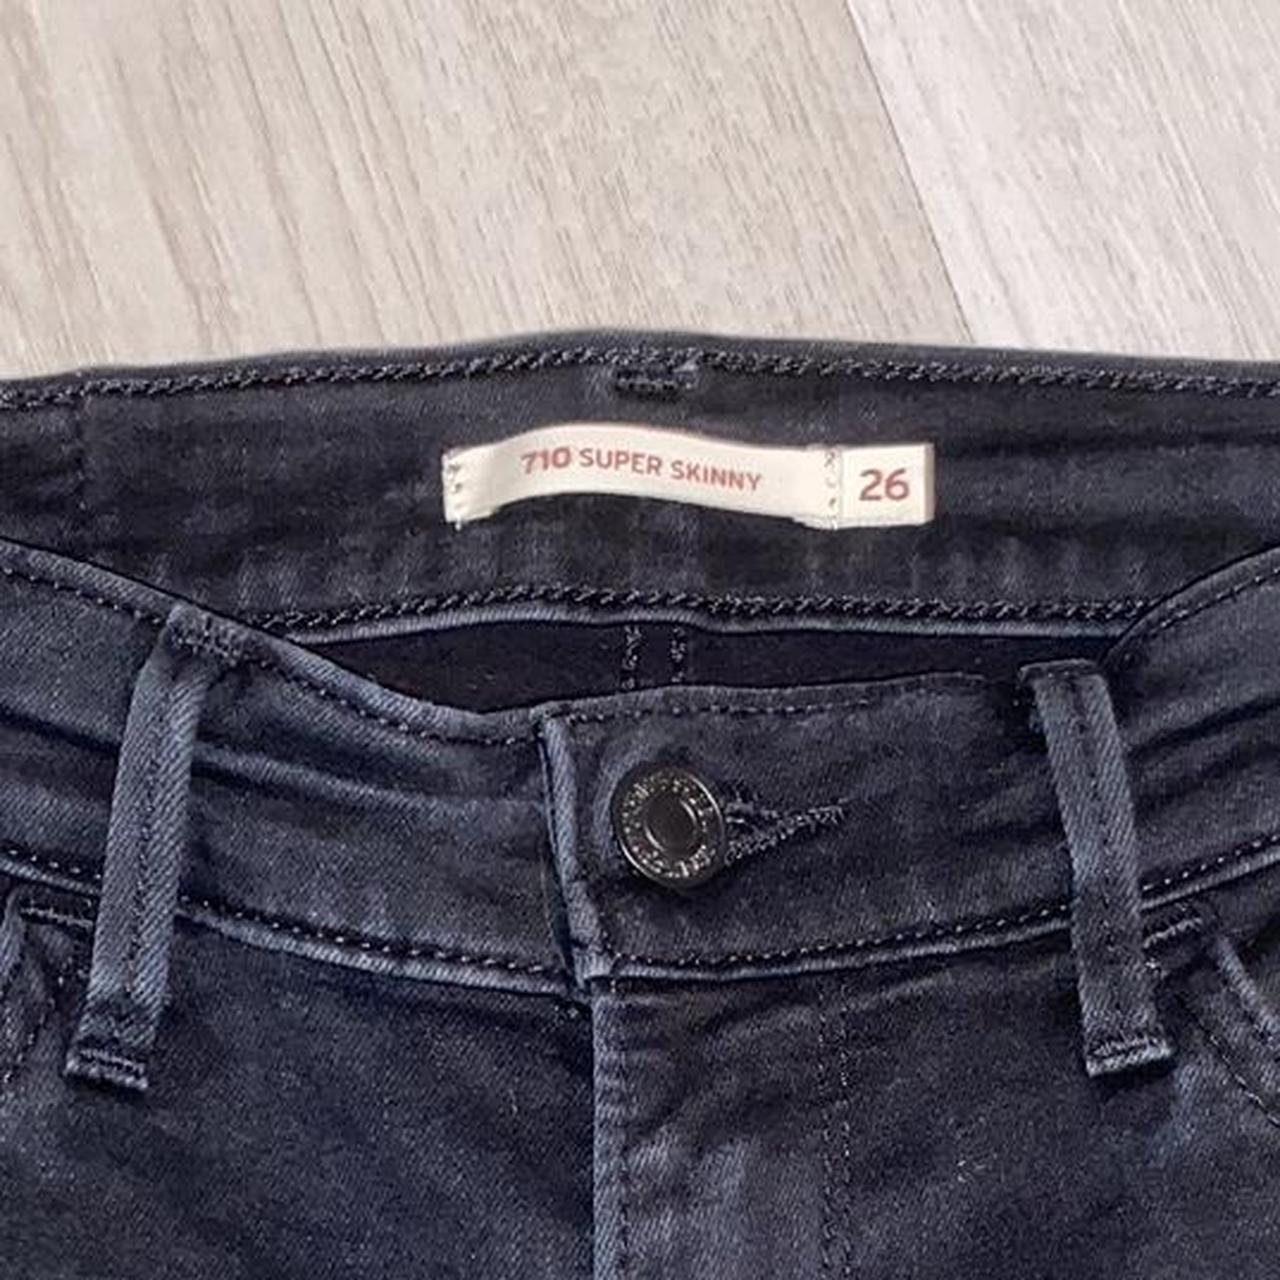 Black skinny jeans Super stretchy W26 L30 - Depop